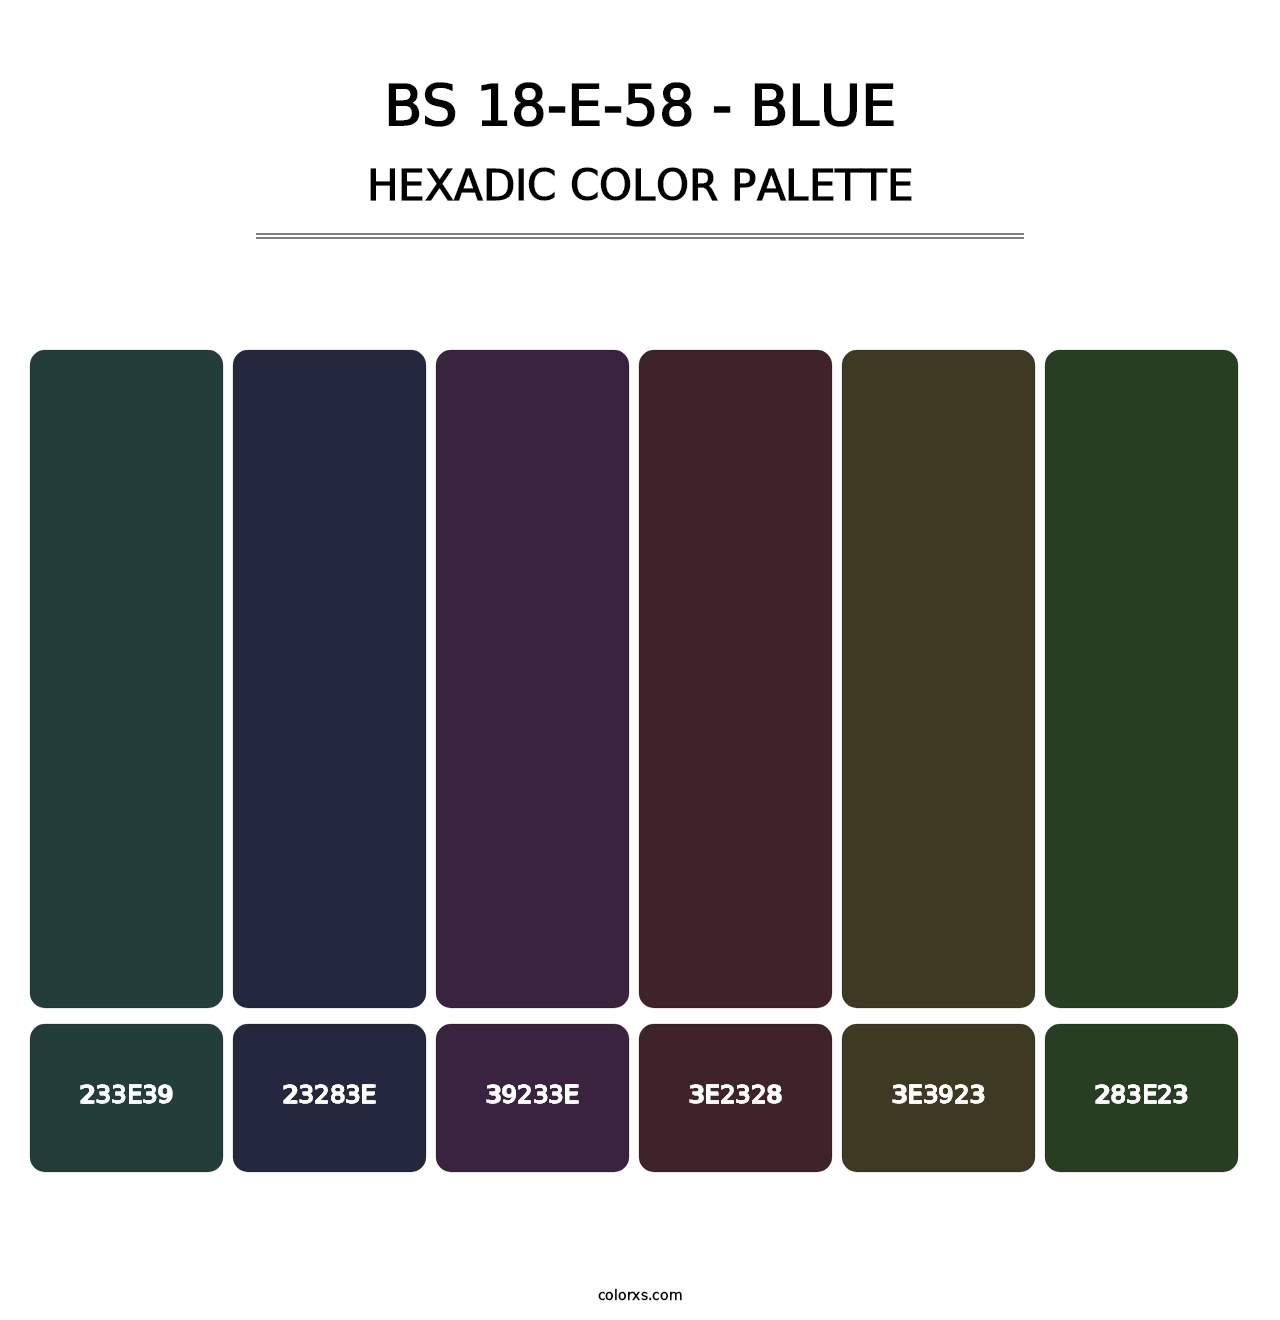 BS 18-E-58 - Blue - Hexadic Color Palette